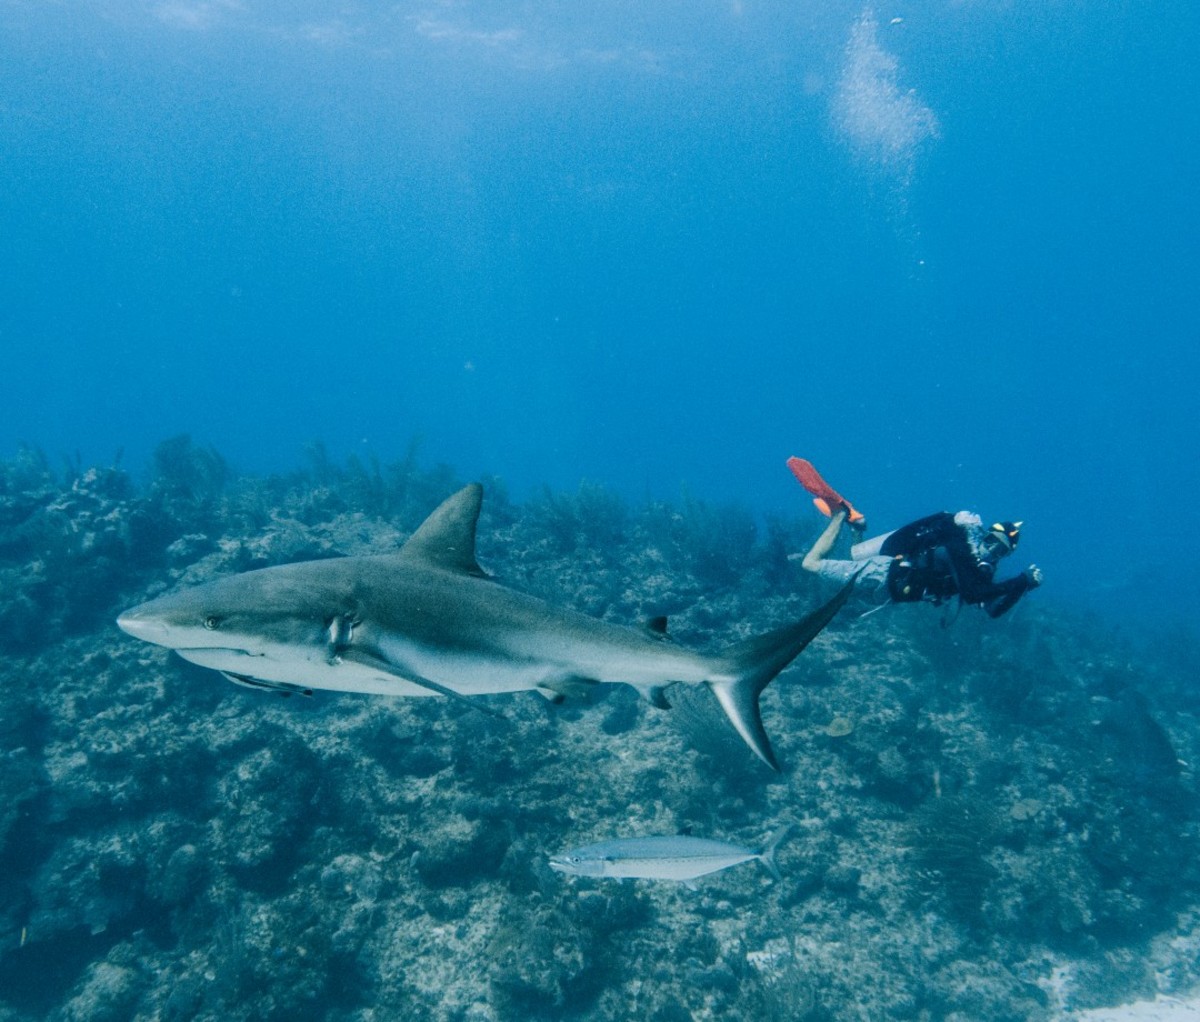 Scuba diving with shark